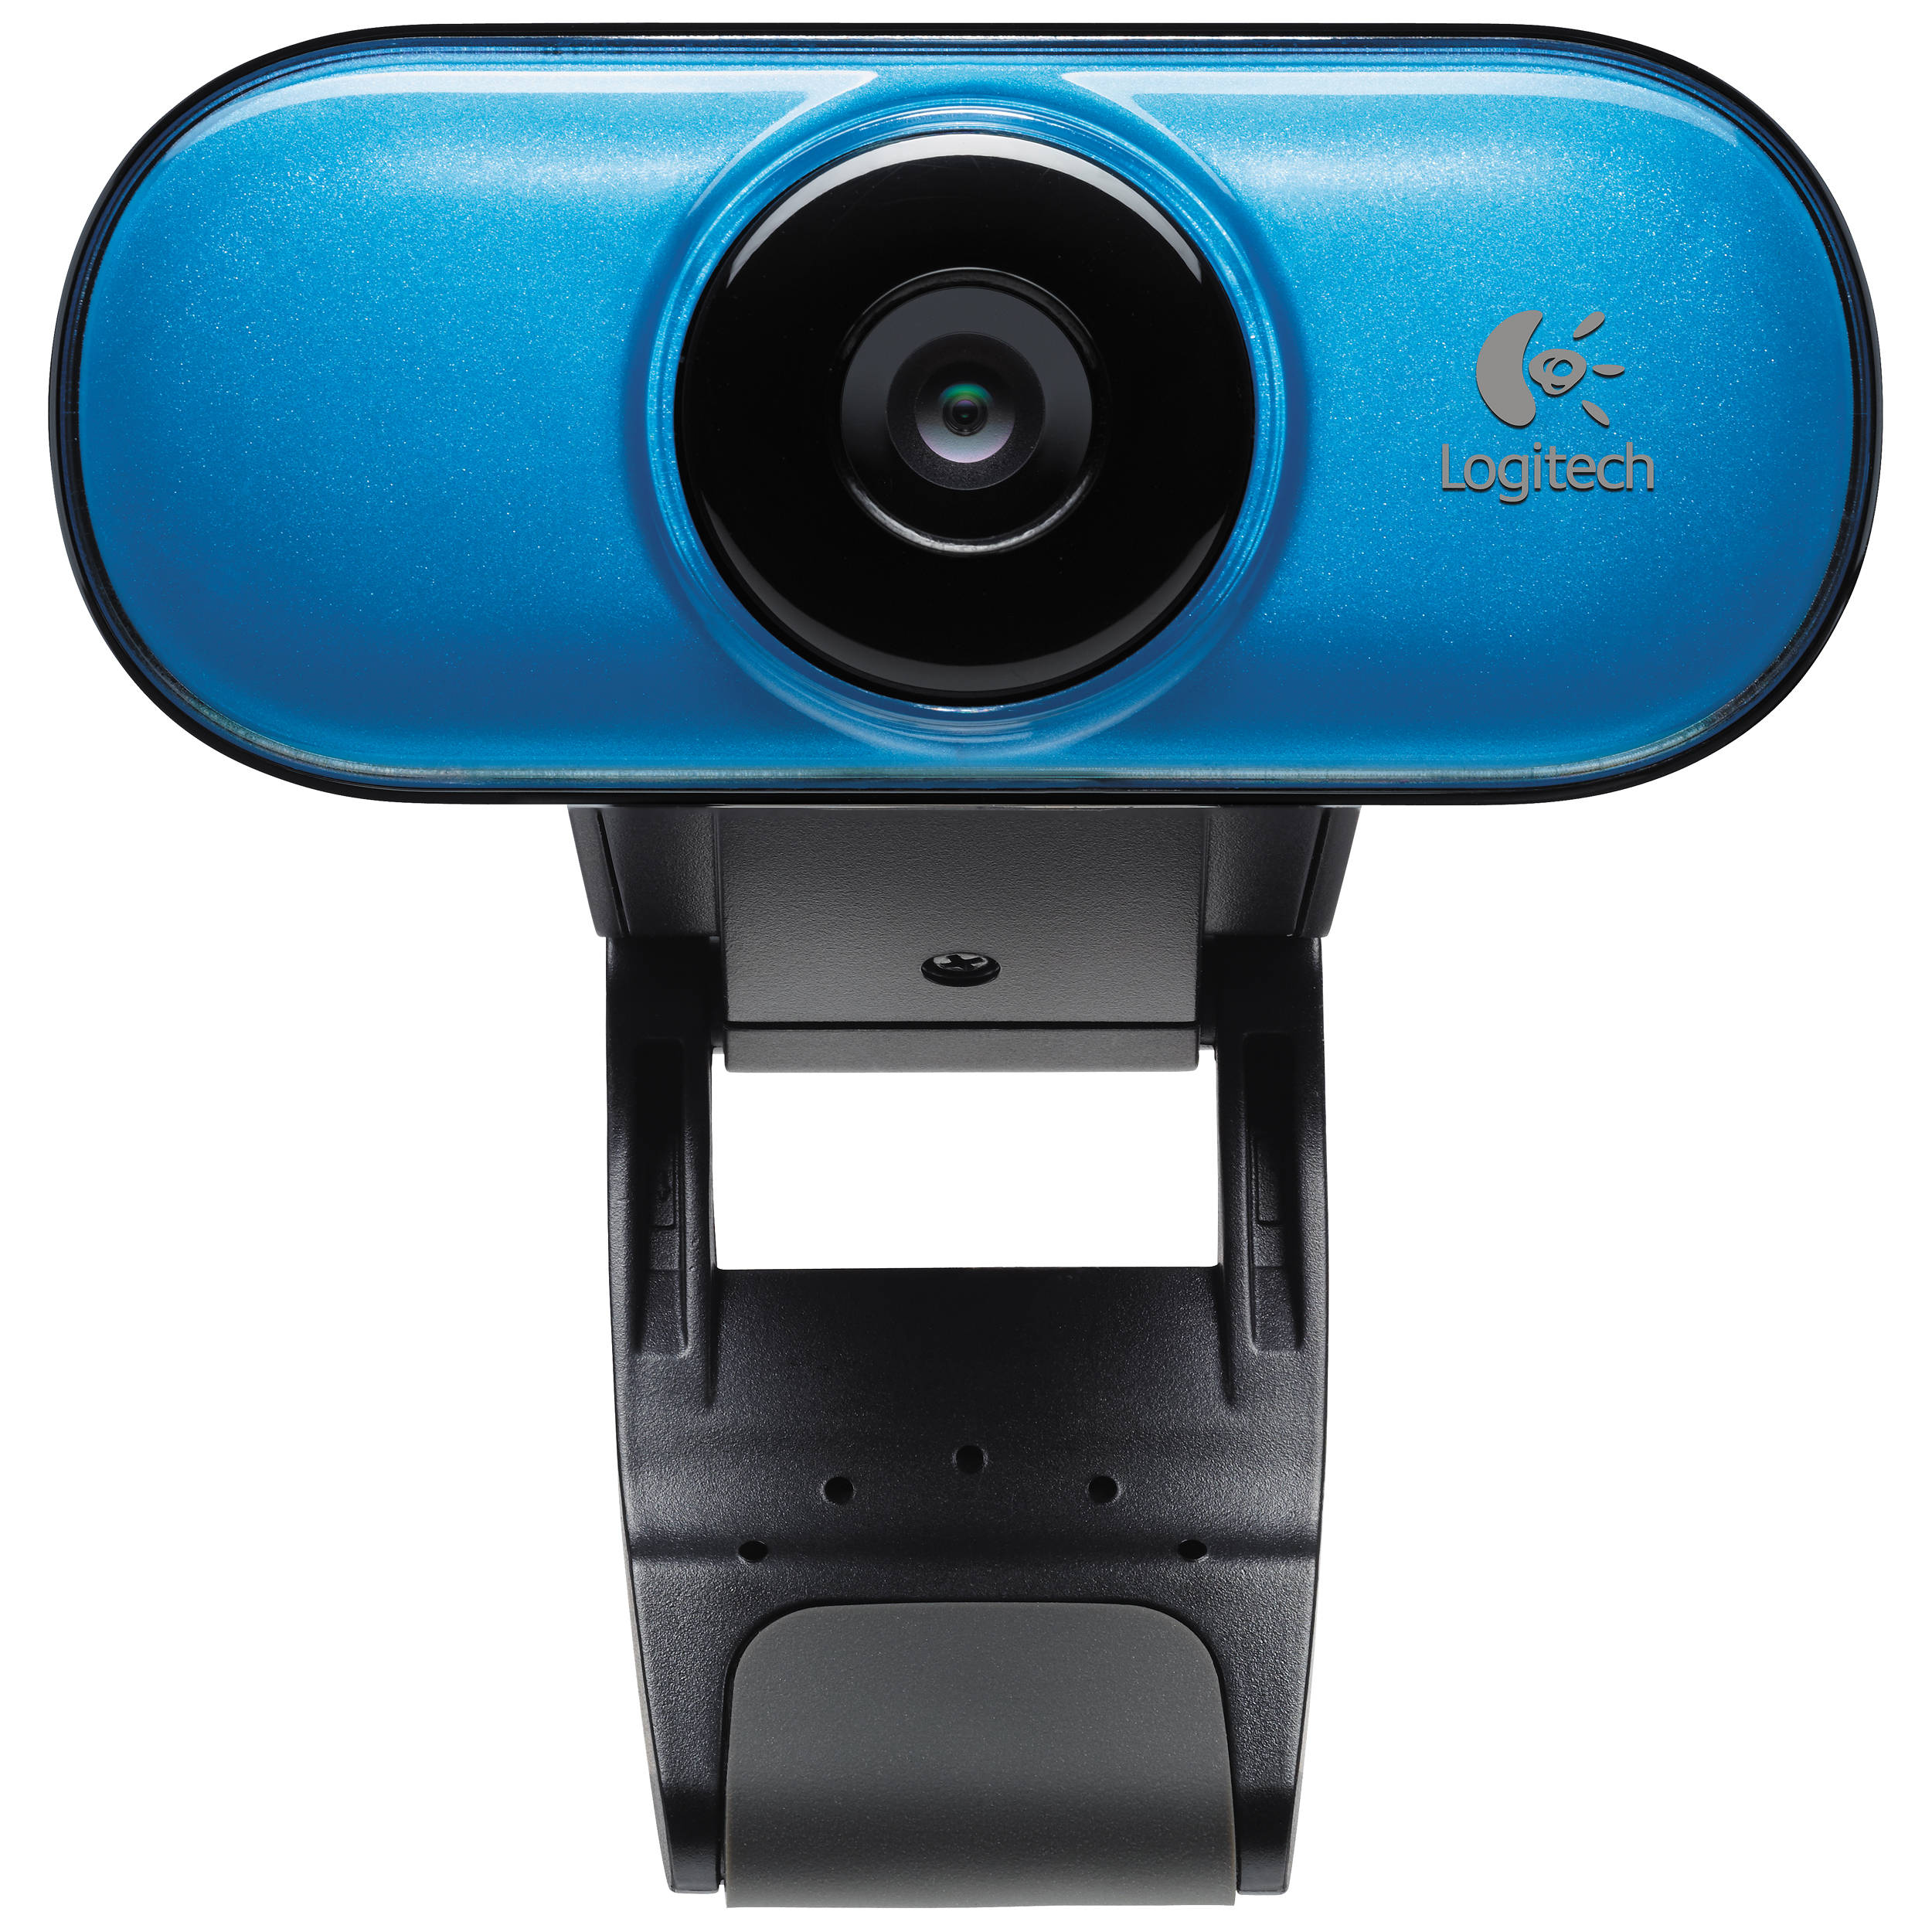 Logitech webcam драйвера. Logitech webcam c210. Веб камера Logitech c210. Logitech webcam c910. Logitech web Camera c210.